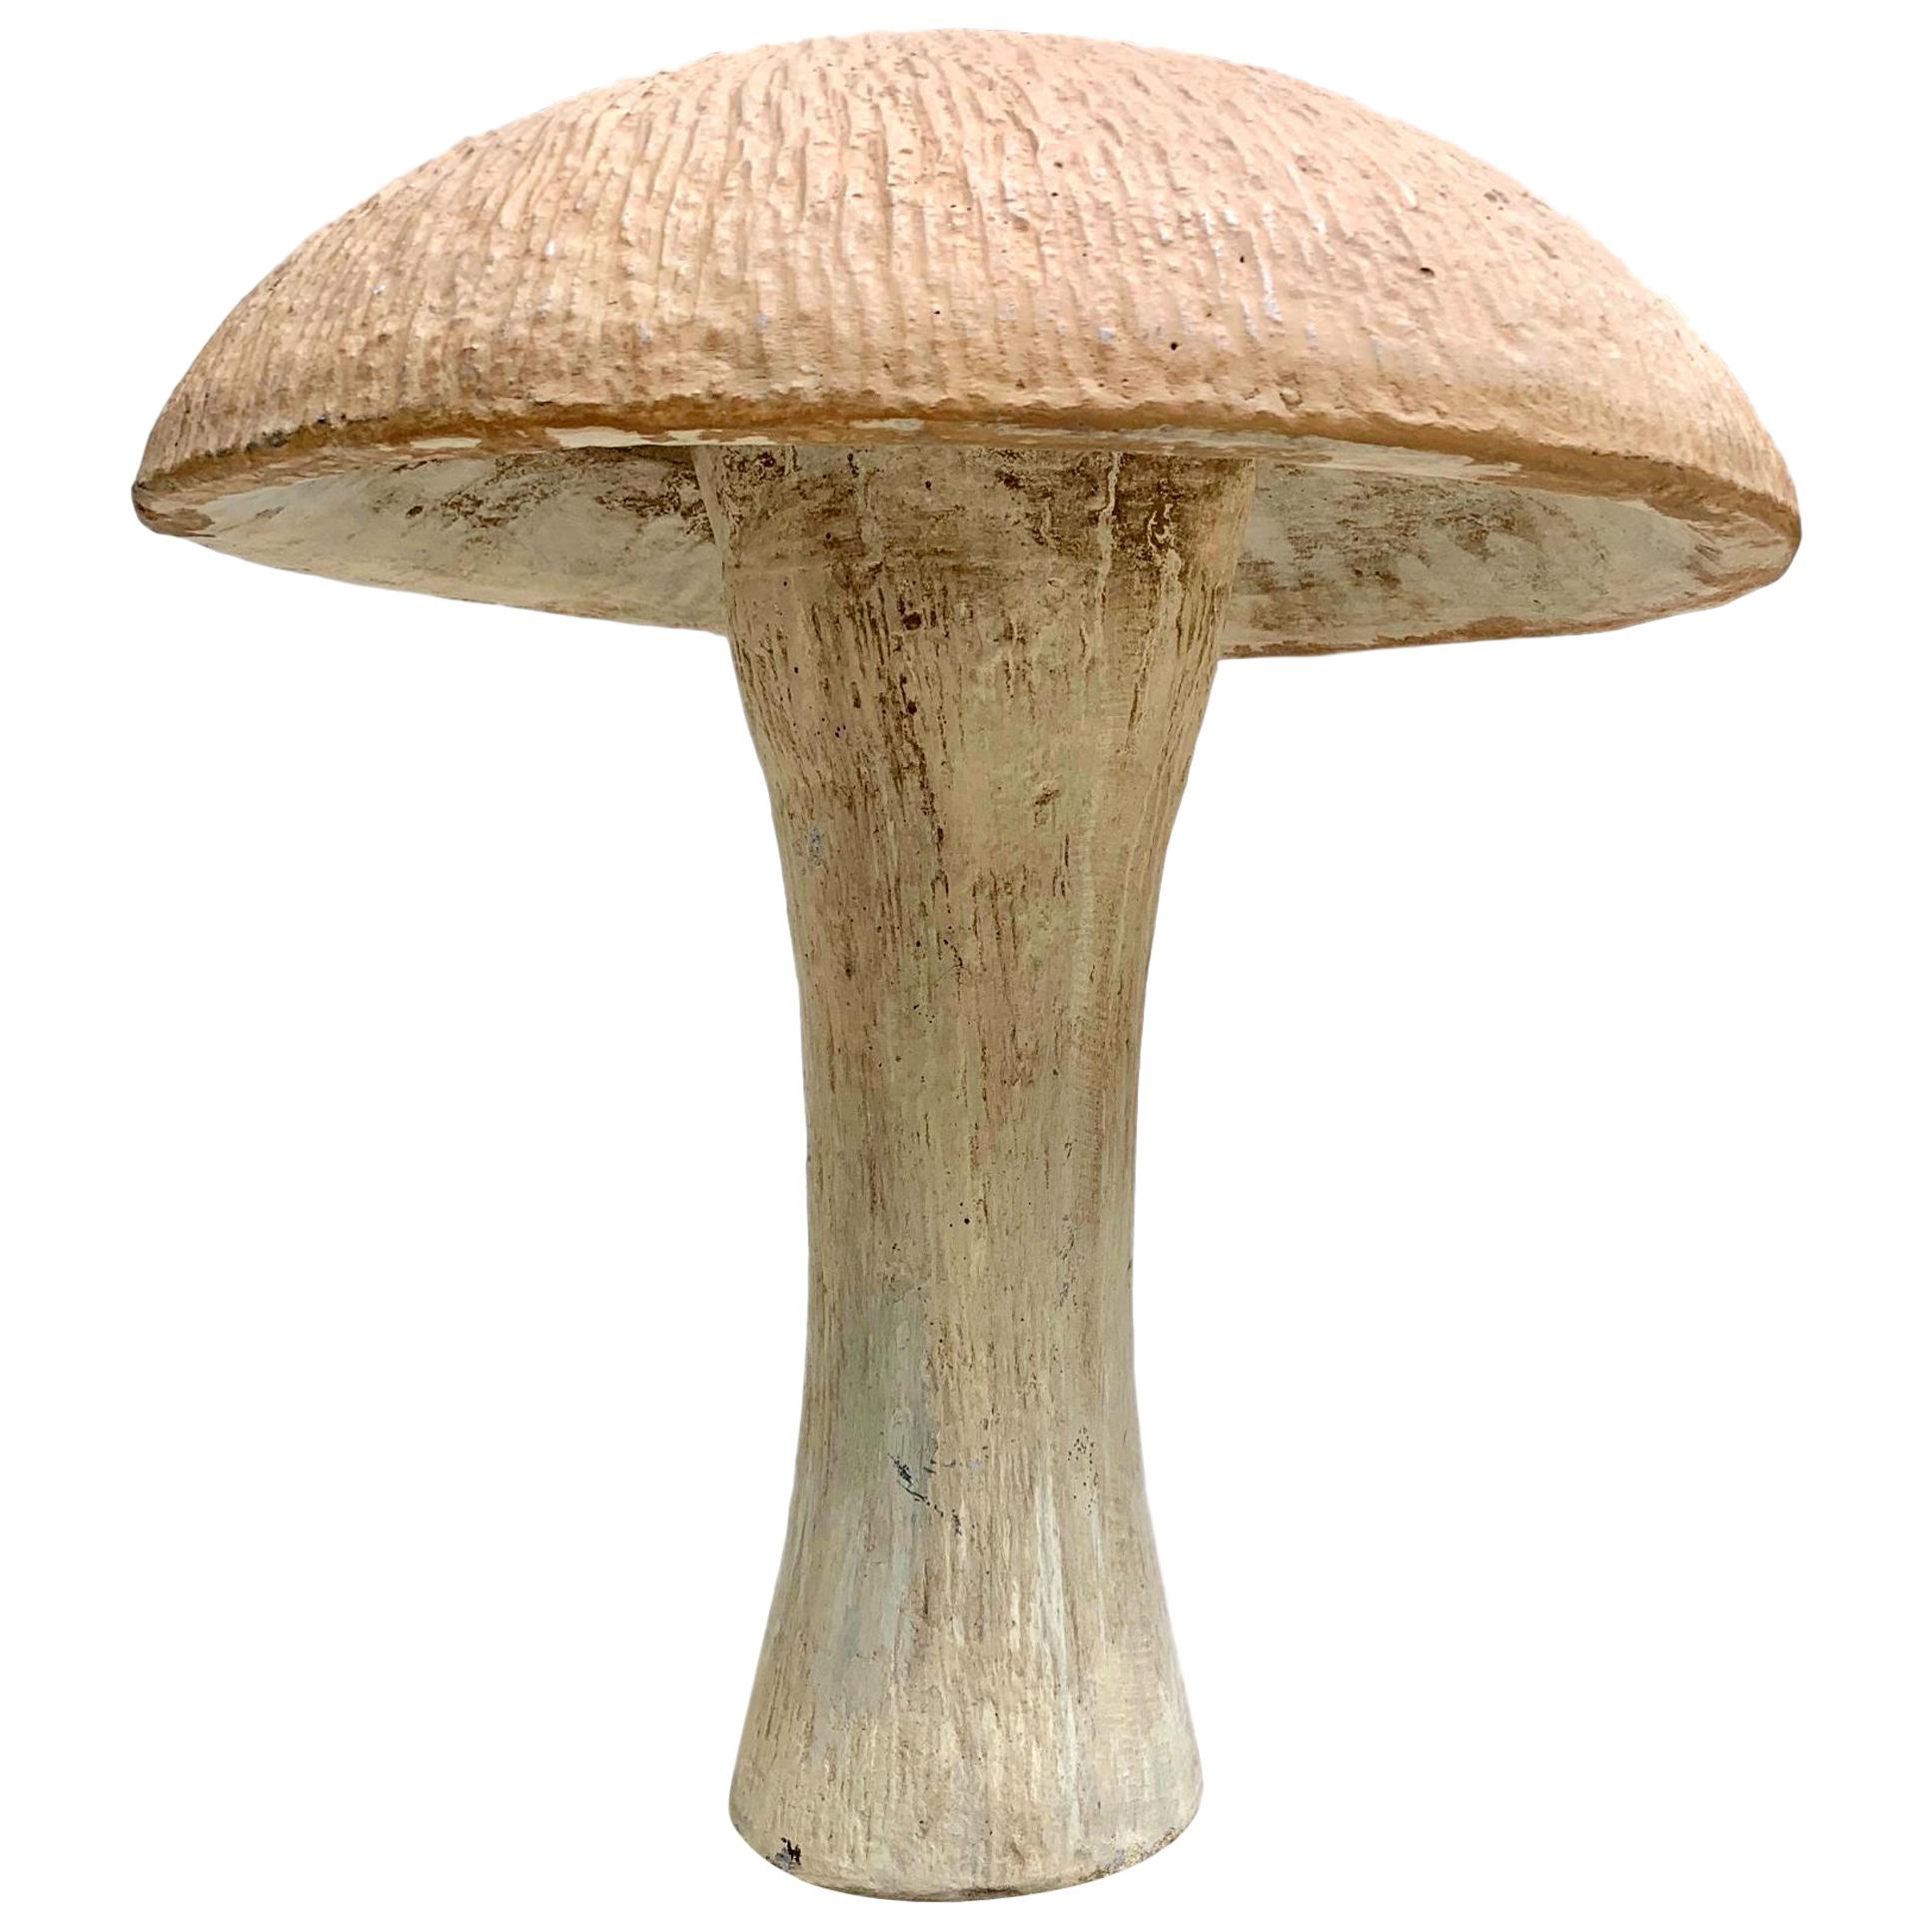 Oversized Concrete Mushroom Stool